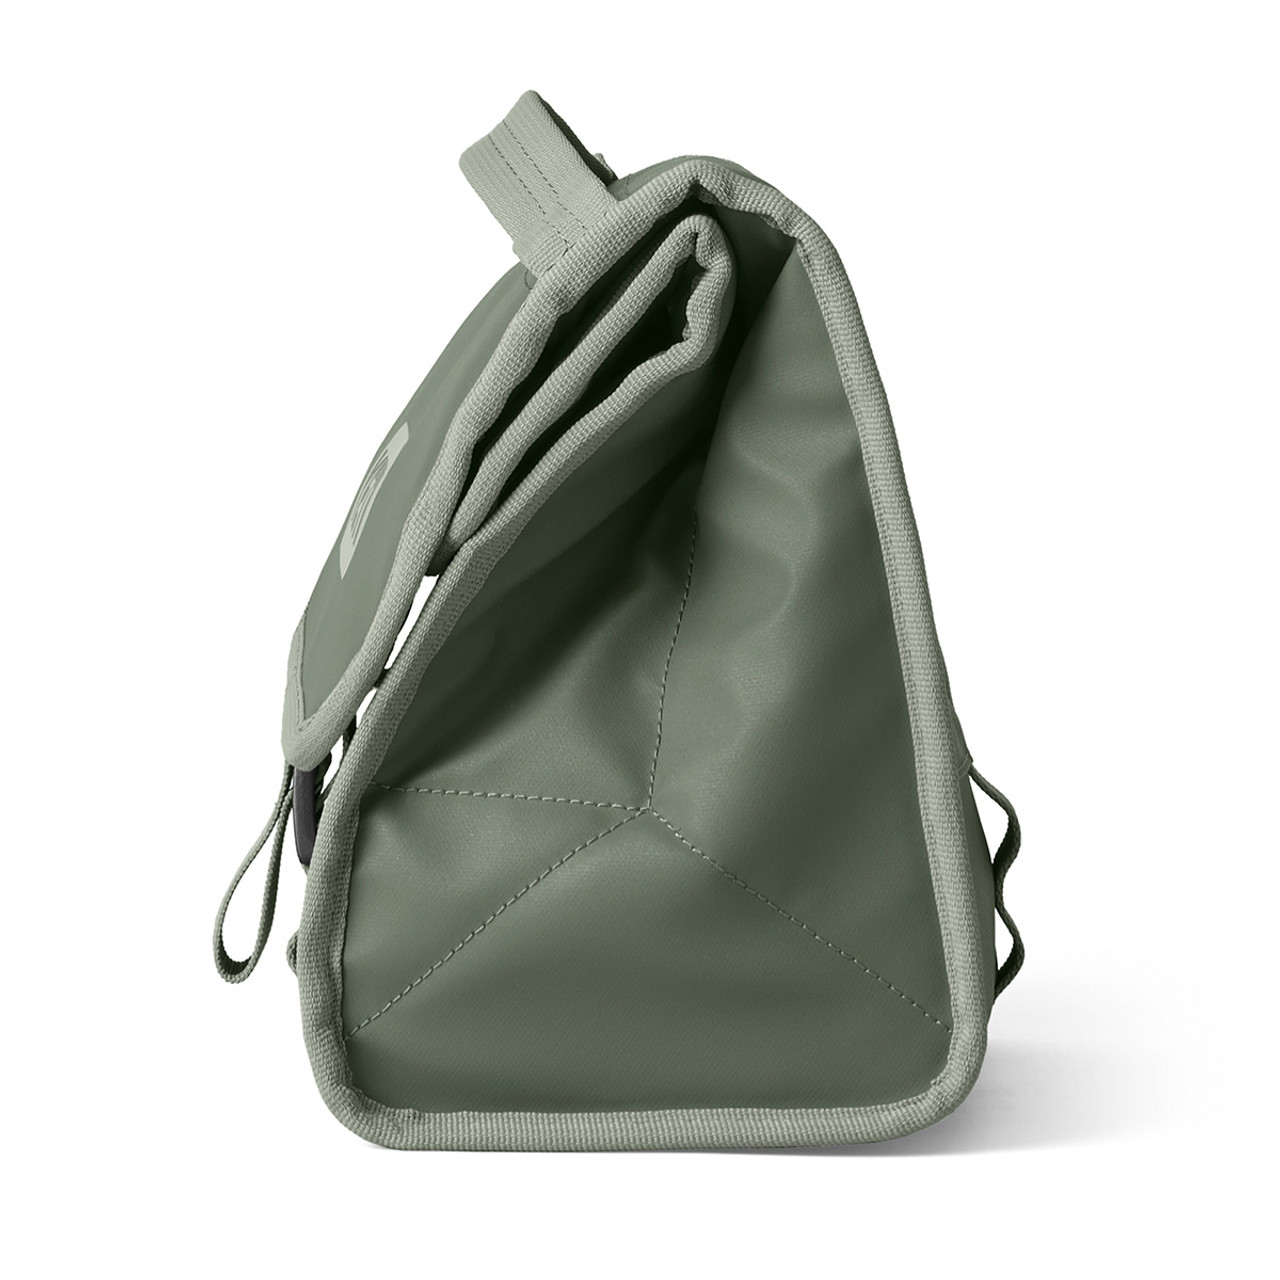 YETI / Daytrip Lunch Bag - Sagebrush Green